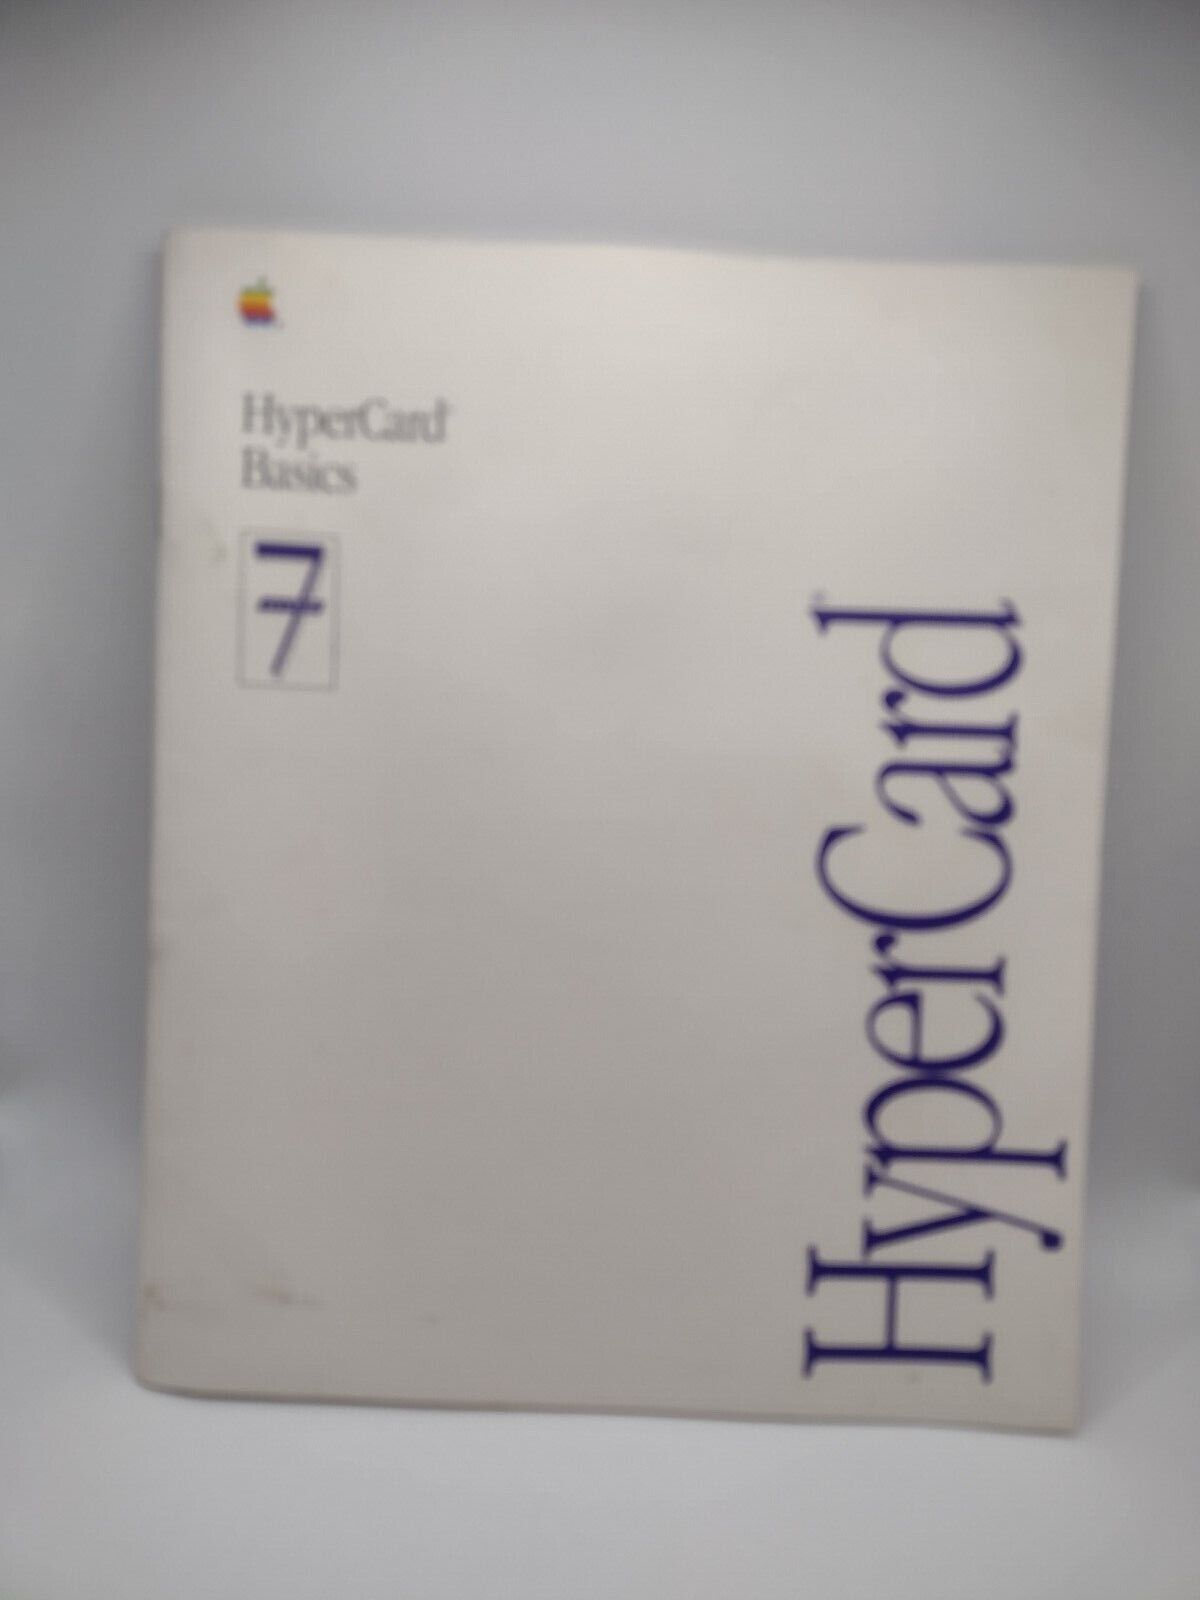 1991 Apple Macintosh VINTAGE HyperCard Basics Manual & Disk - v 2.1 690-5765-A